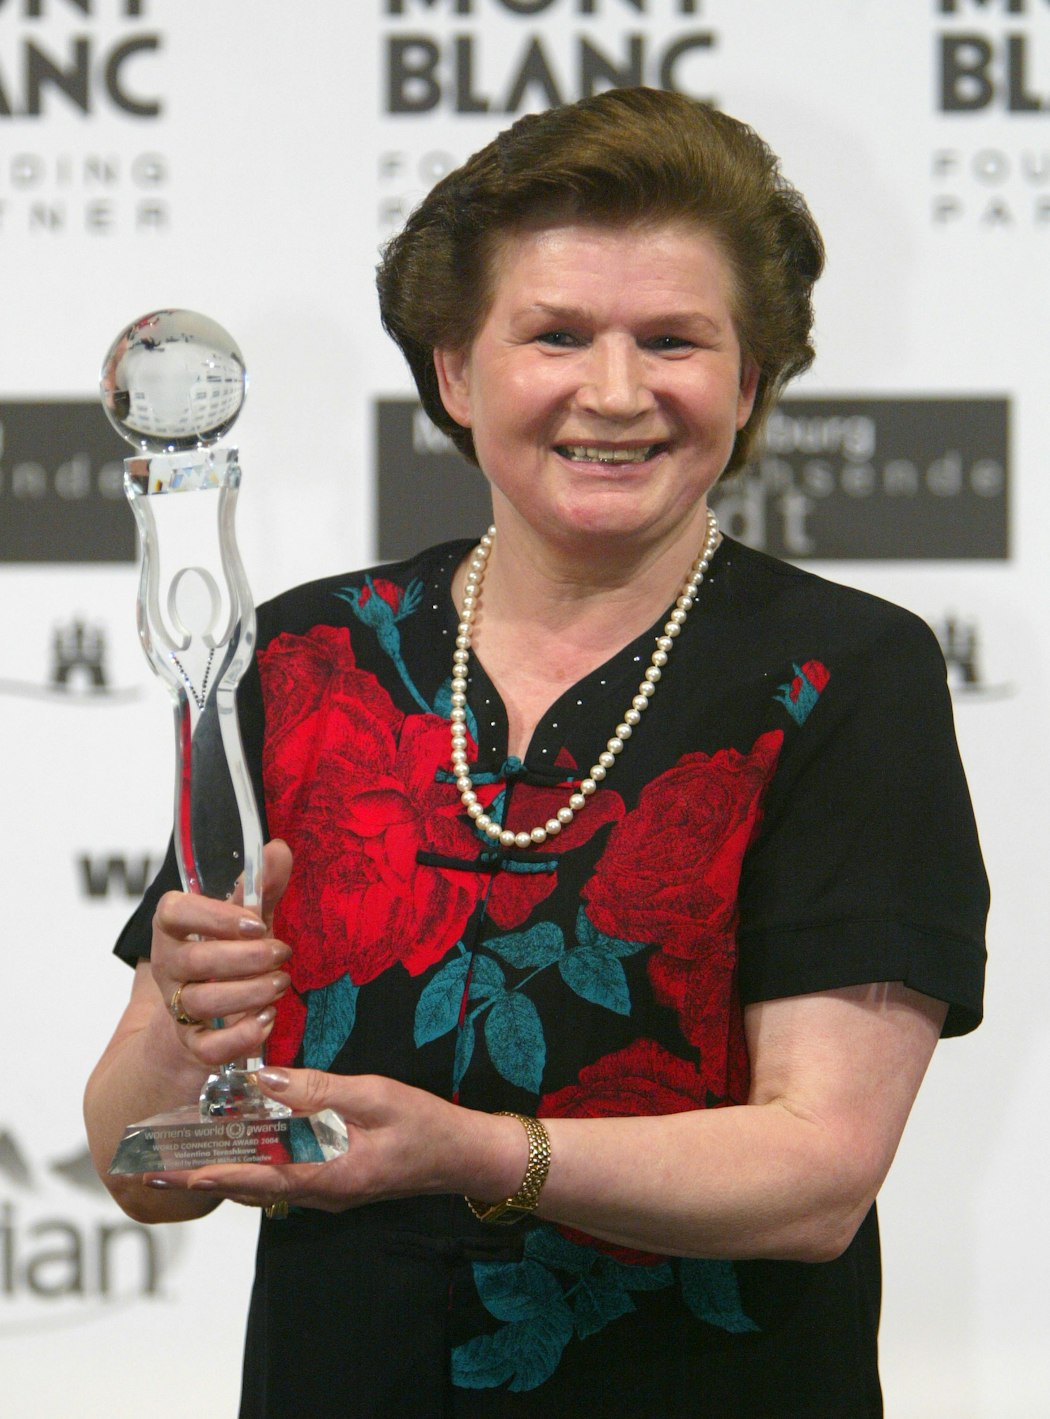 Former Russian astronaut Valentina Tereshkova received a World Connection Award at the Women's World Award at Congress Center June 9, 2004 in Hamburg, Germany. 